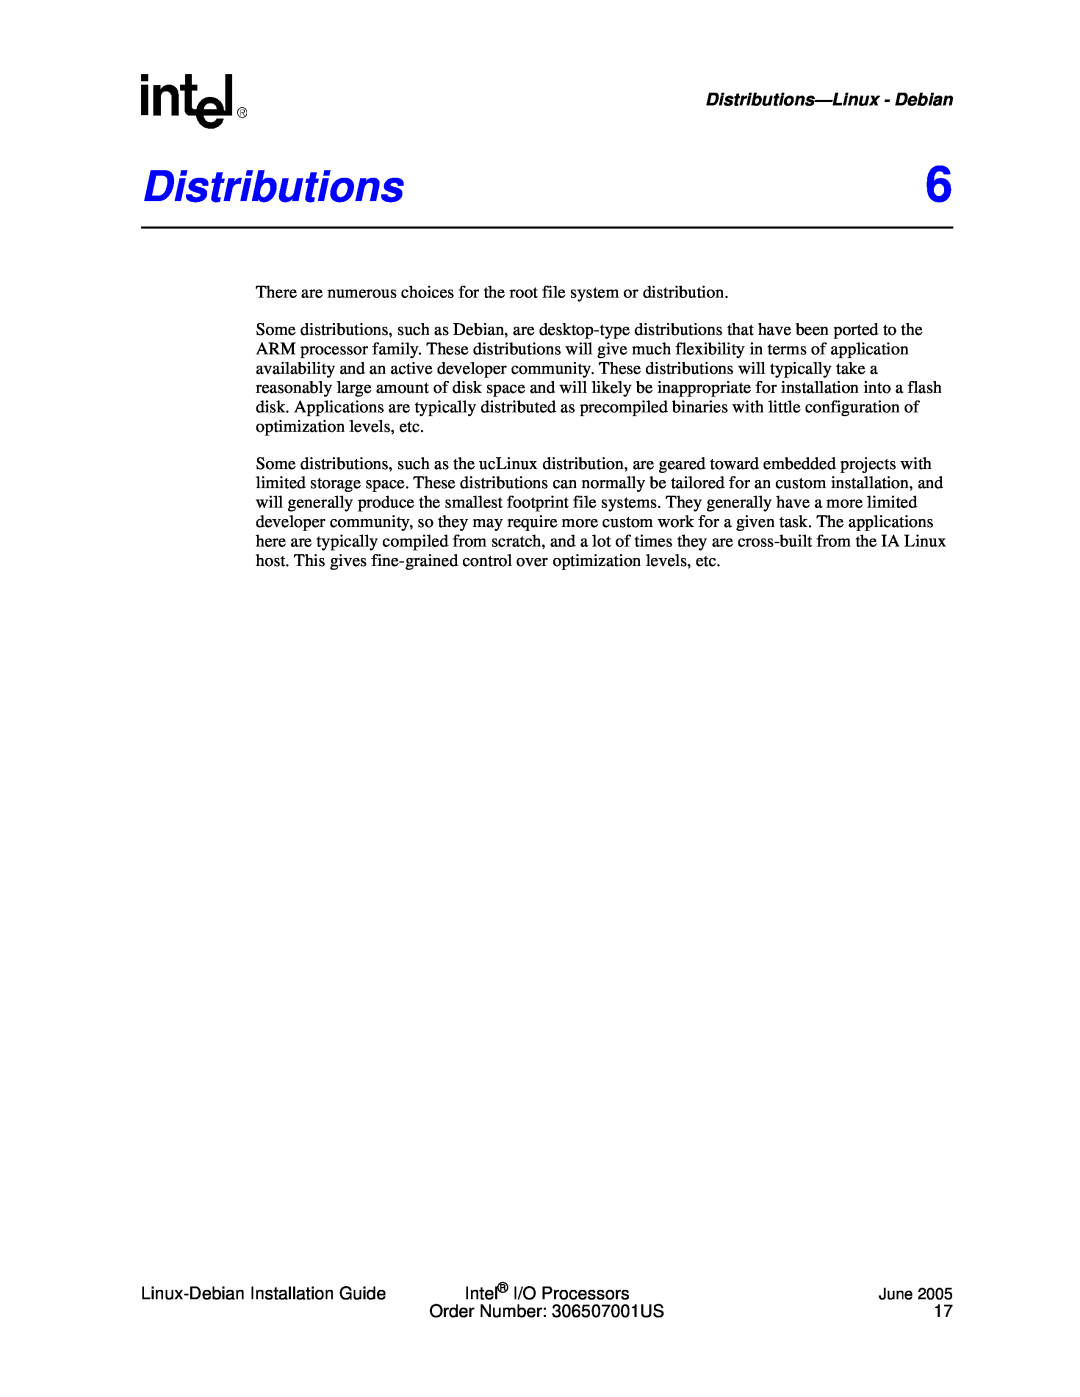 Intel I/O Processor manual Distributions6, Distributions—Linux- Debian 